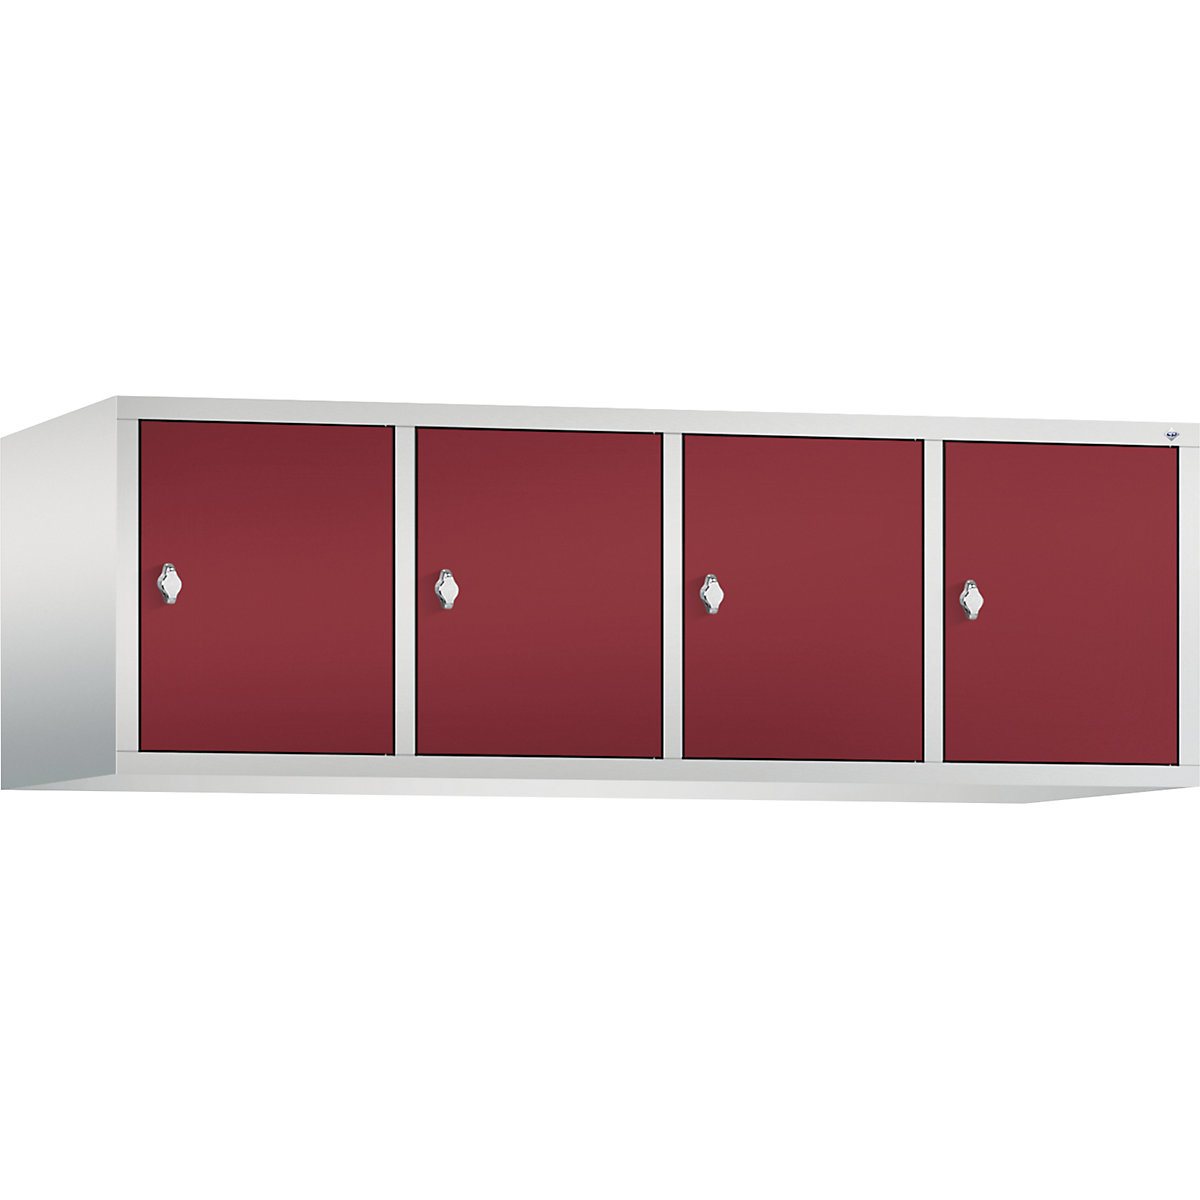 C+P – Altillo CLASSIC, 4 compartimentos, anchura de compartimento 400 mm, gris luminoso / rojo rubí